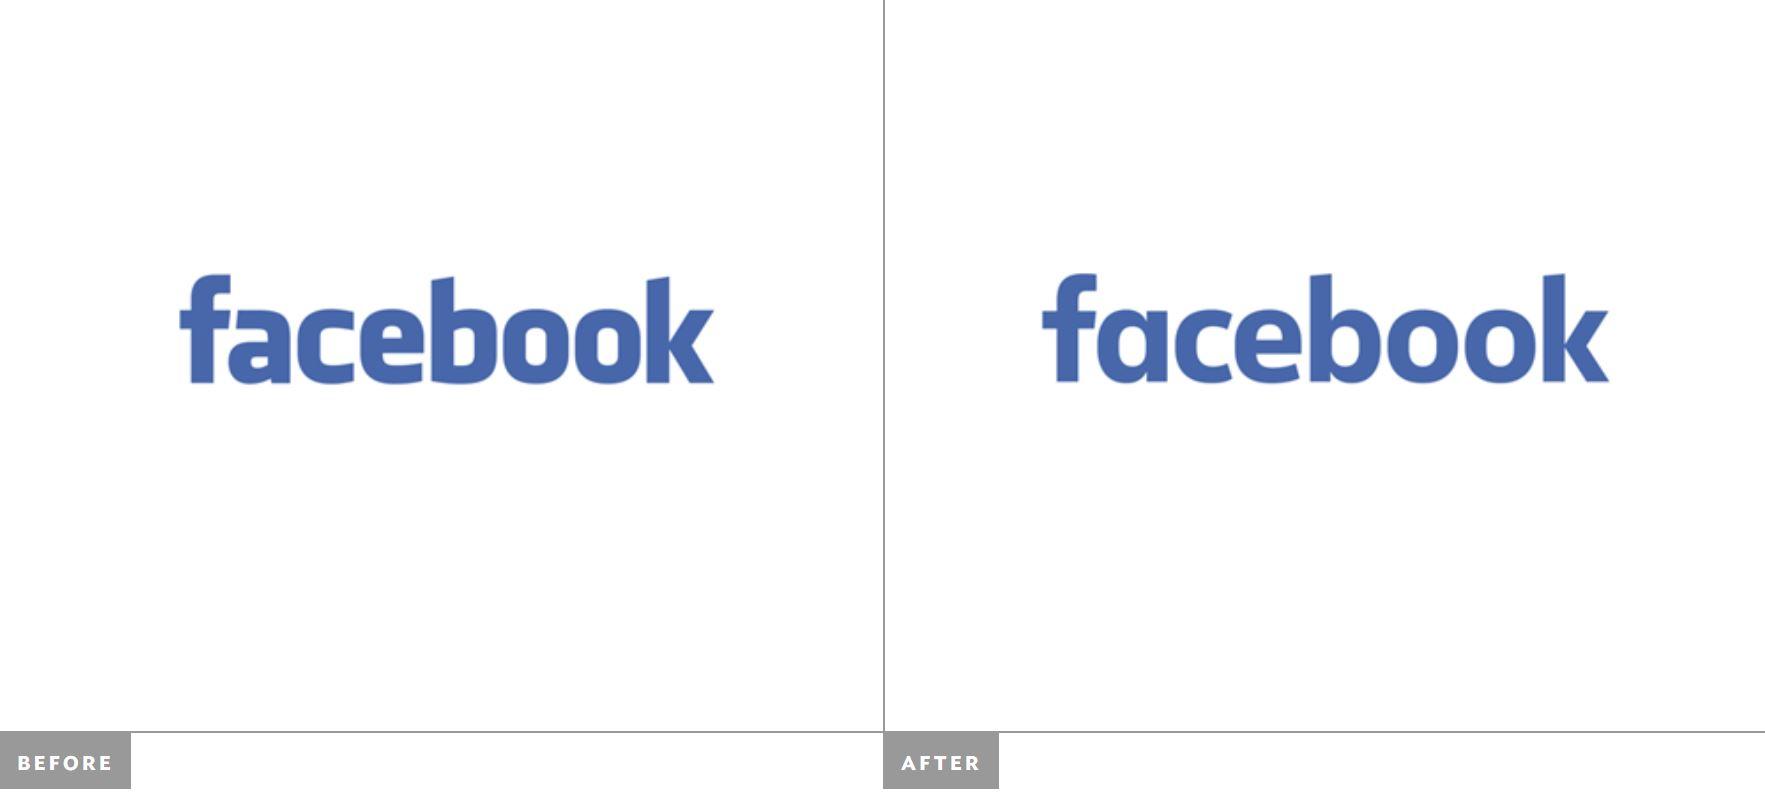 Looking for Facebook Logo - New Facebook vector logo 2015 (.eps file) free download